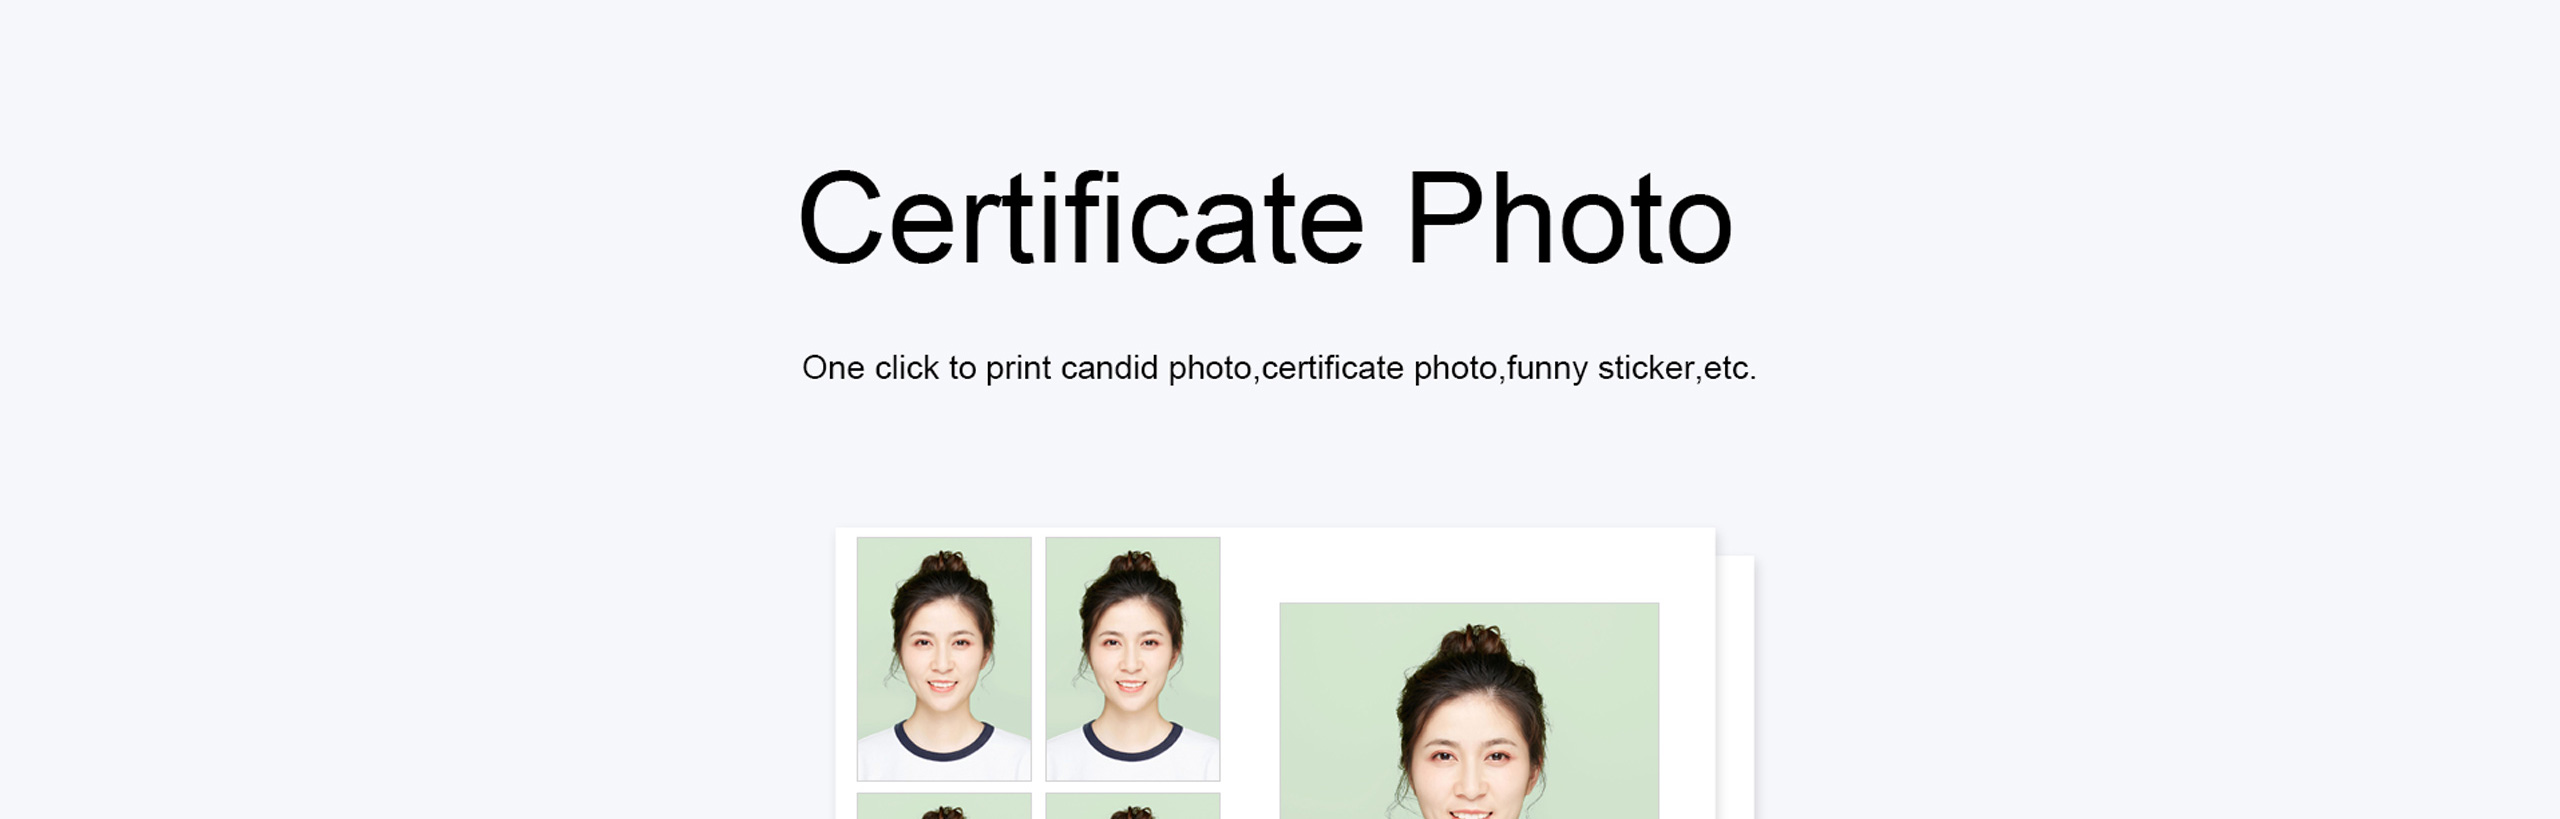 certificate photo printer